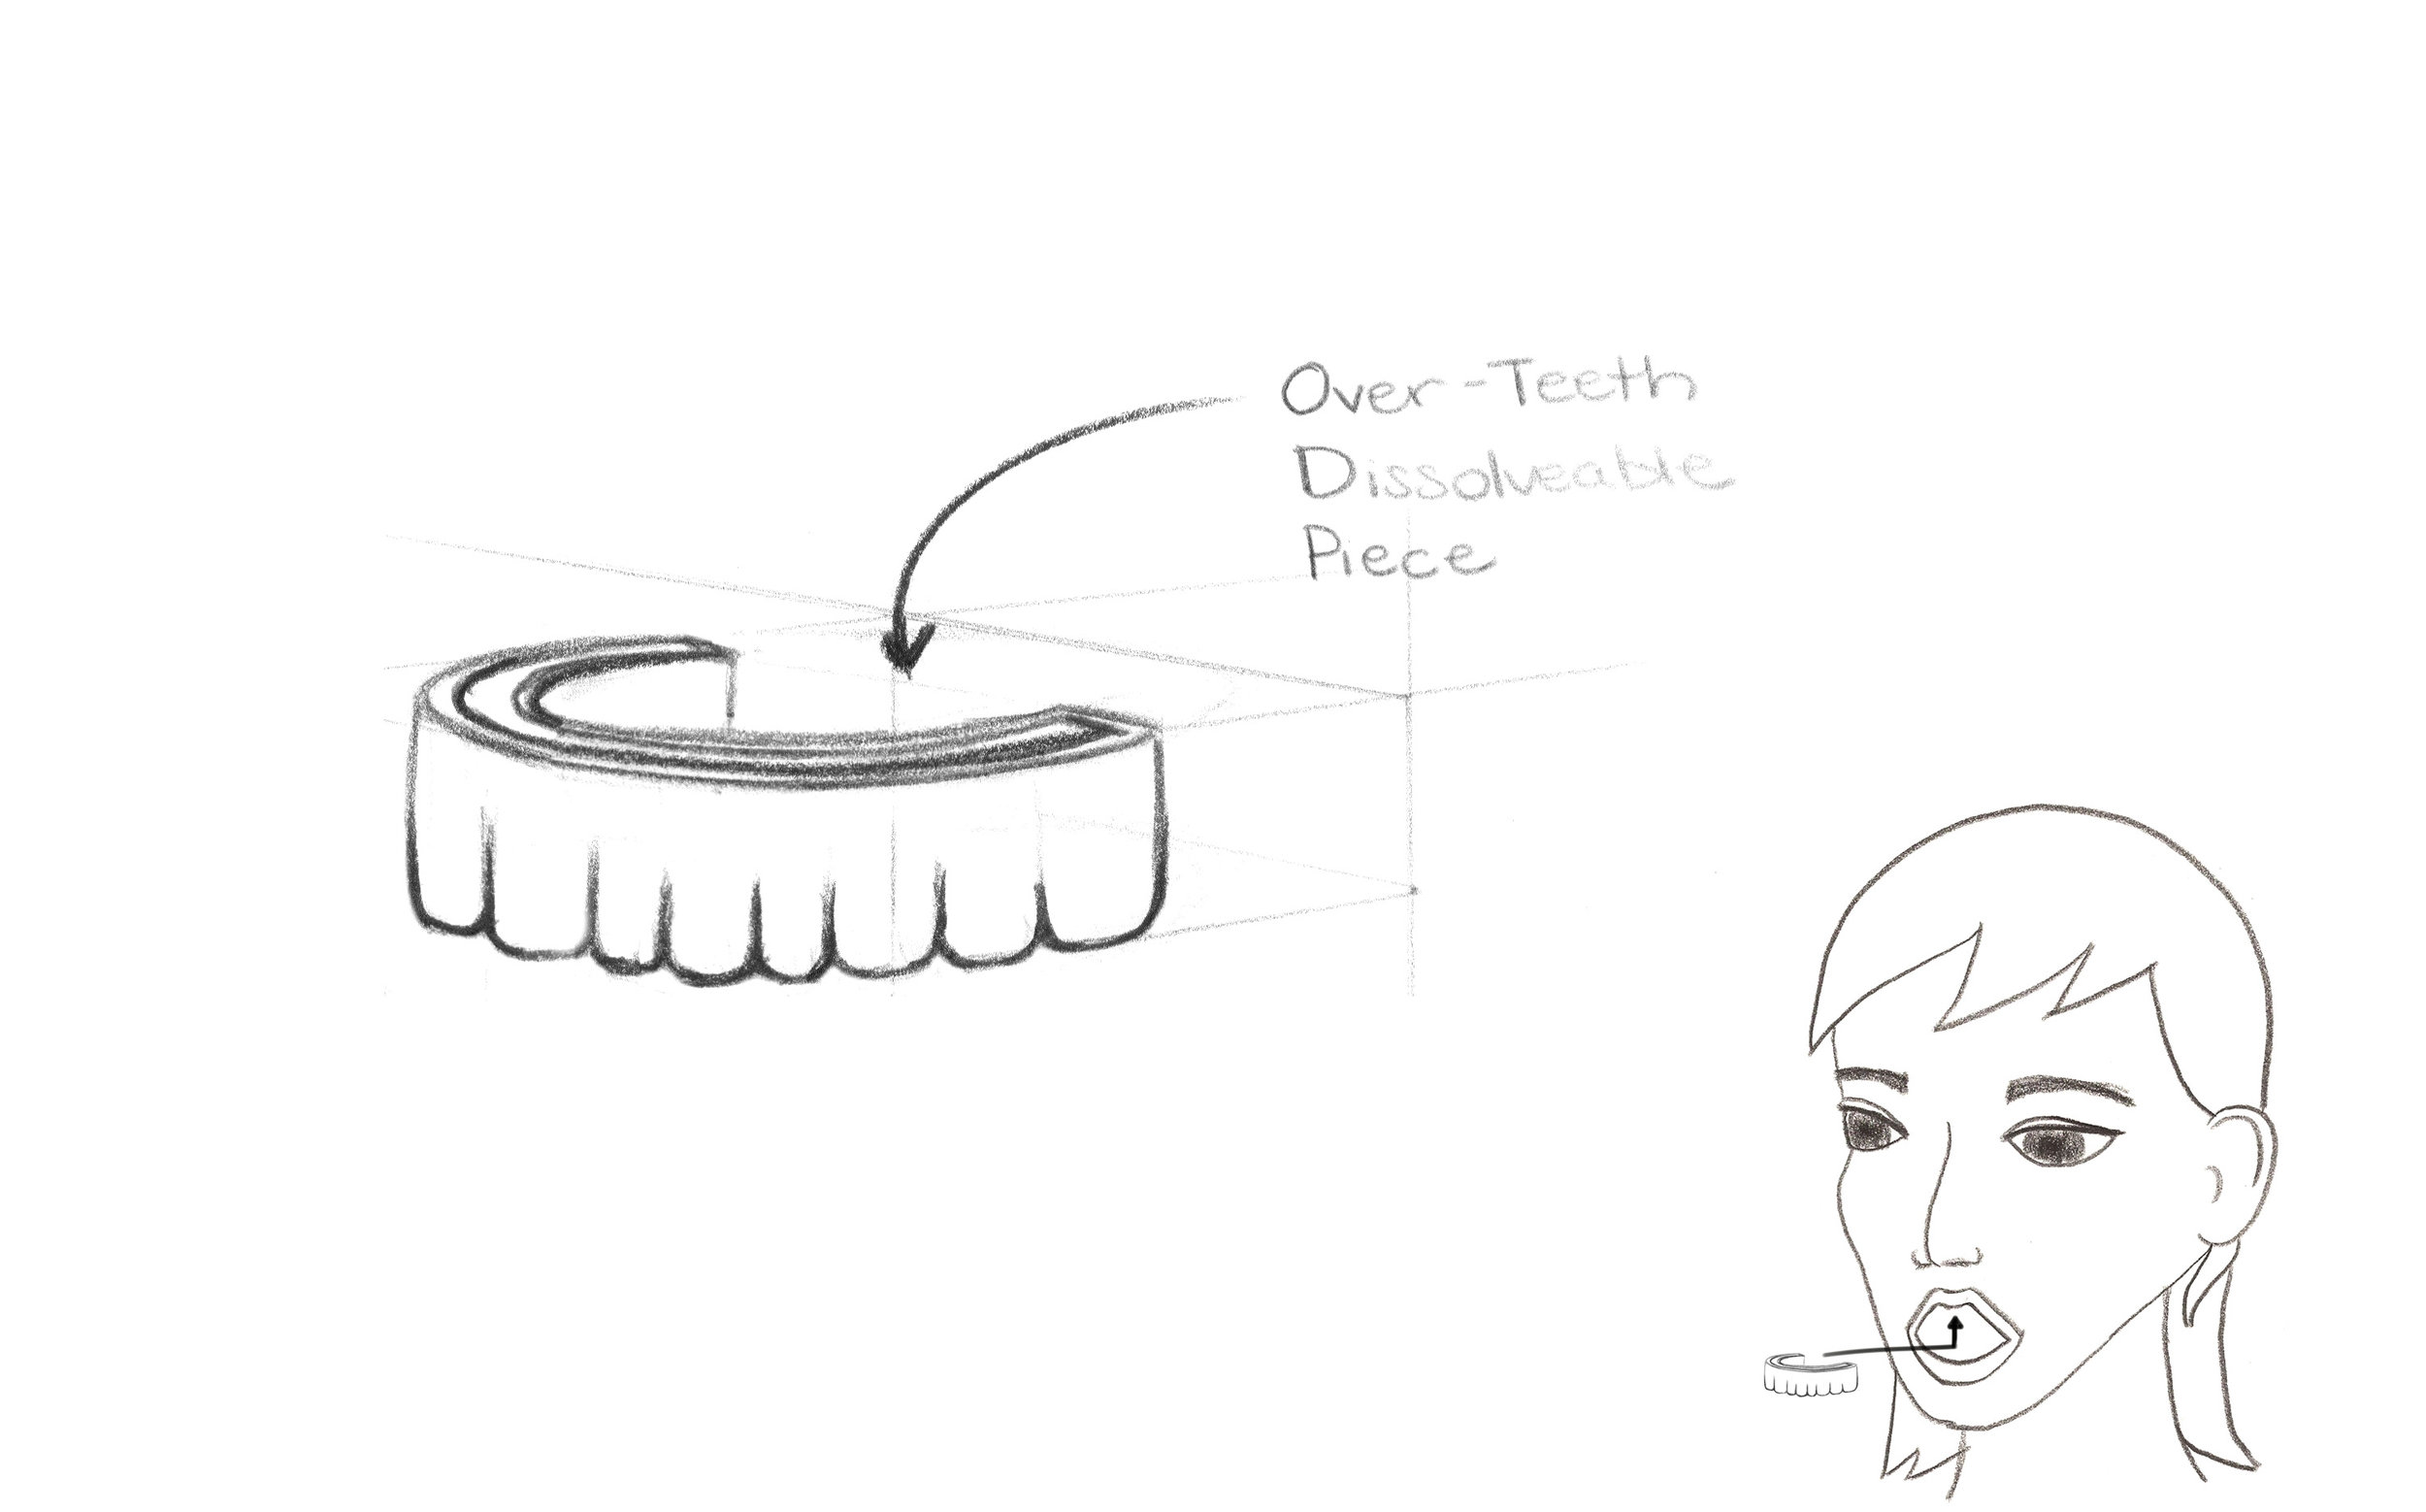 Augmented Taste Concept: 3D-Printed Dissolving Teeth Piece